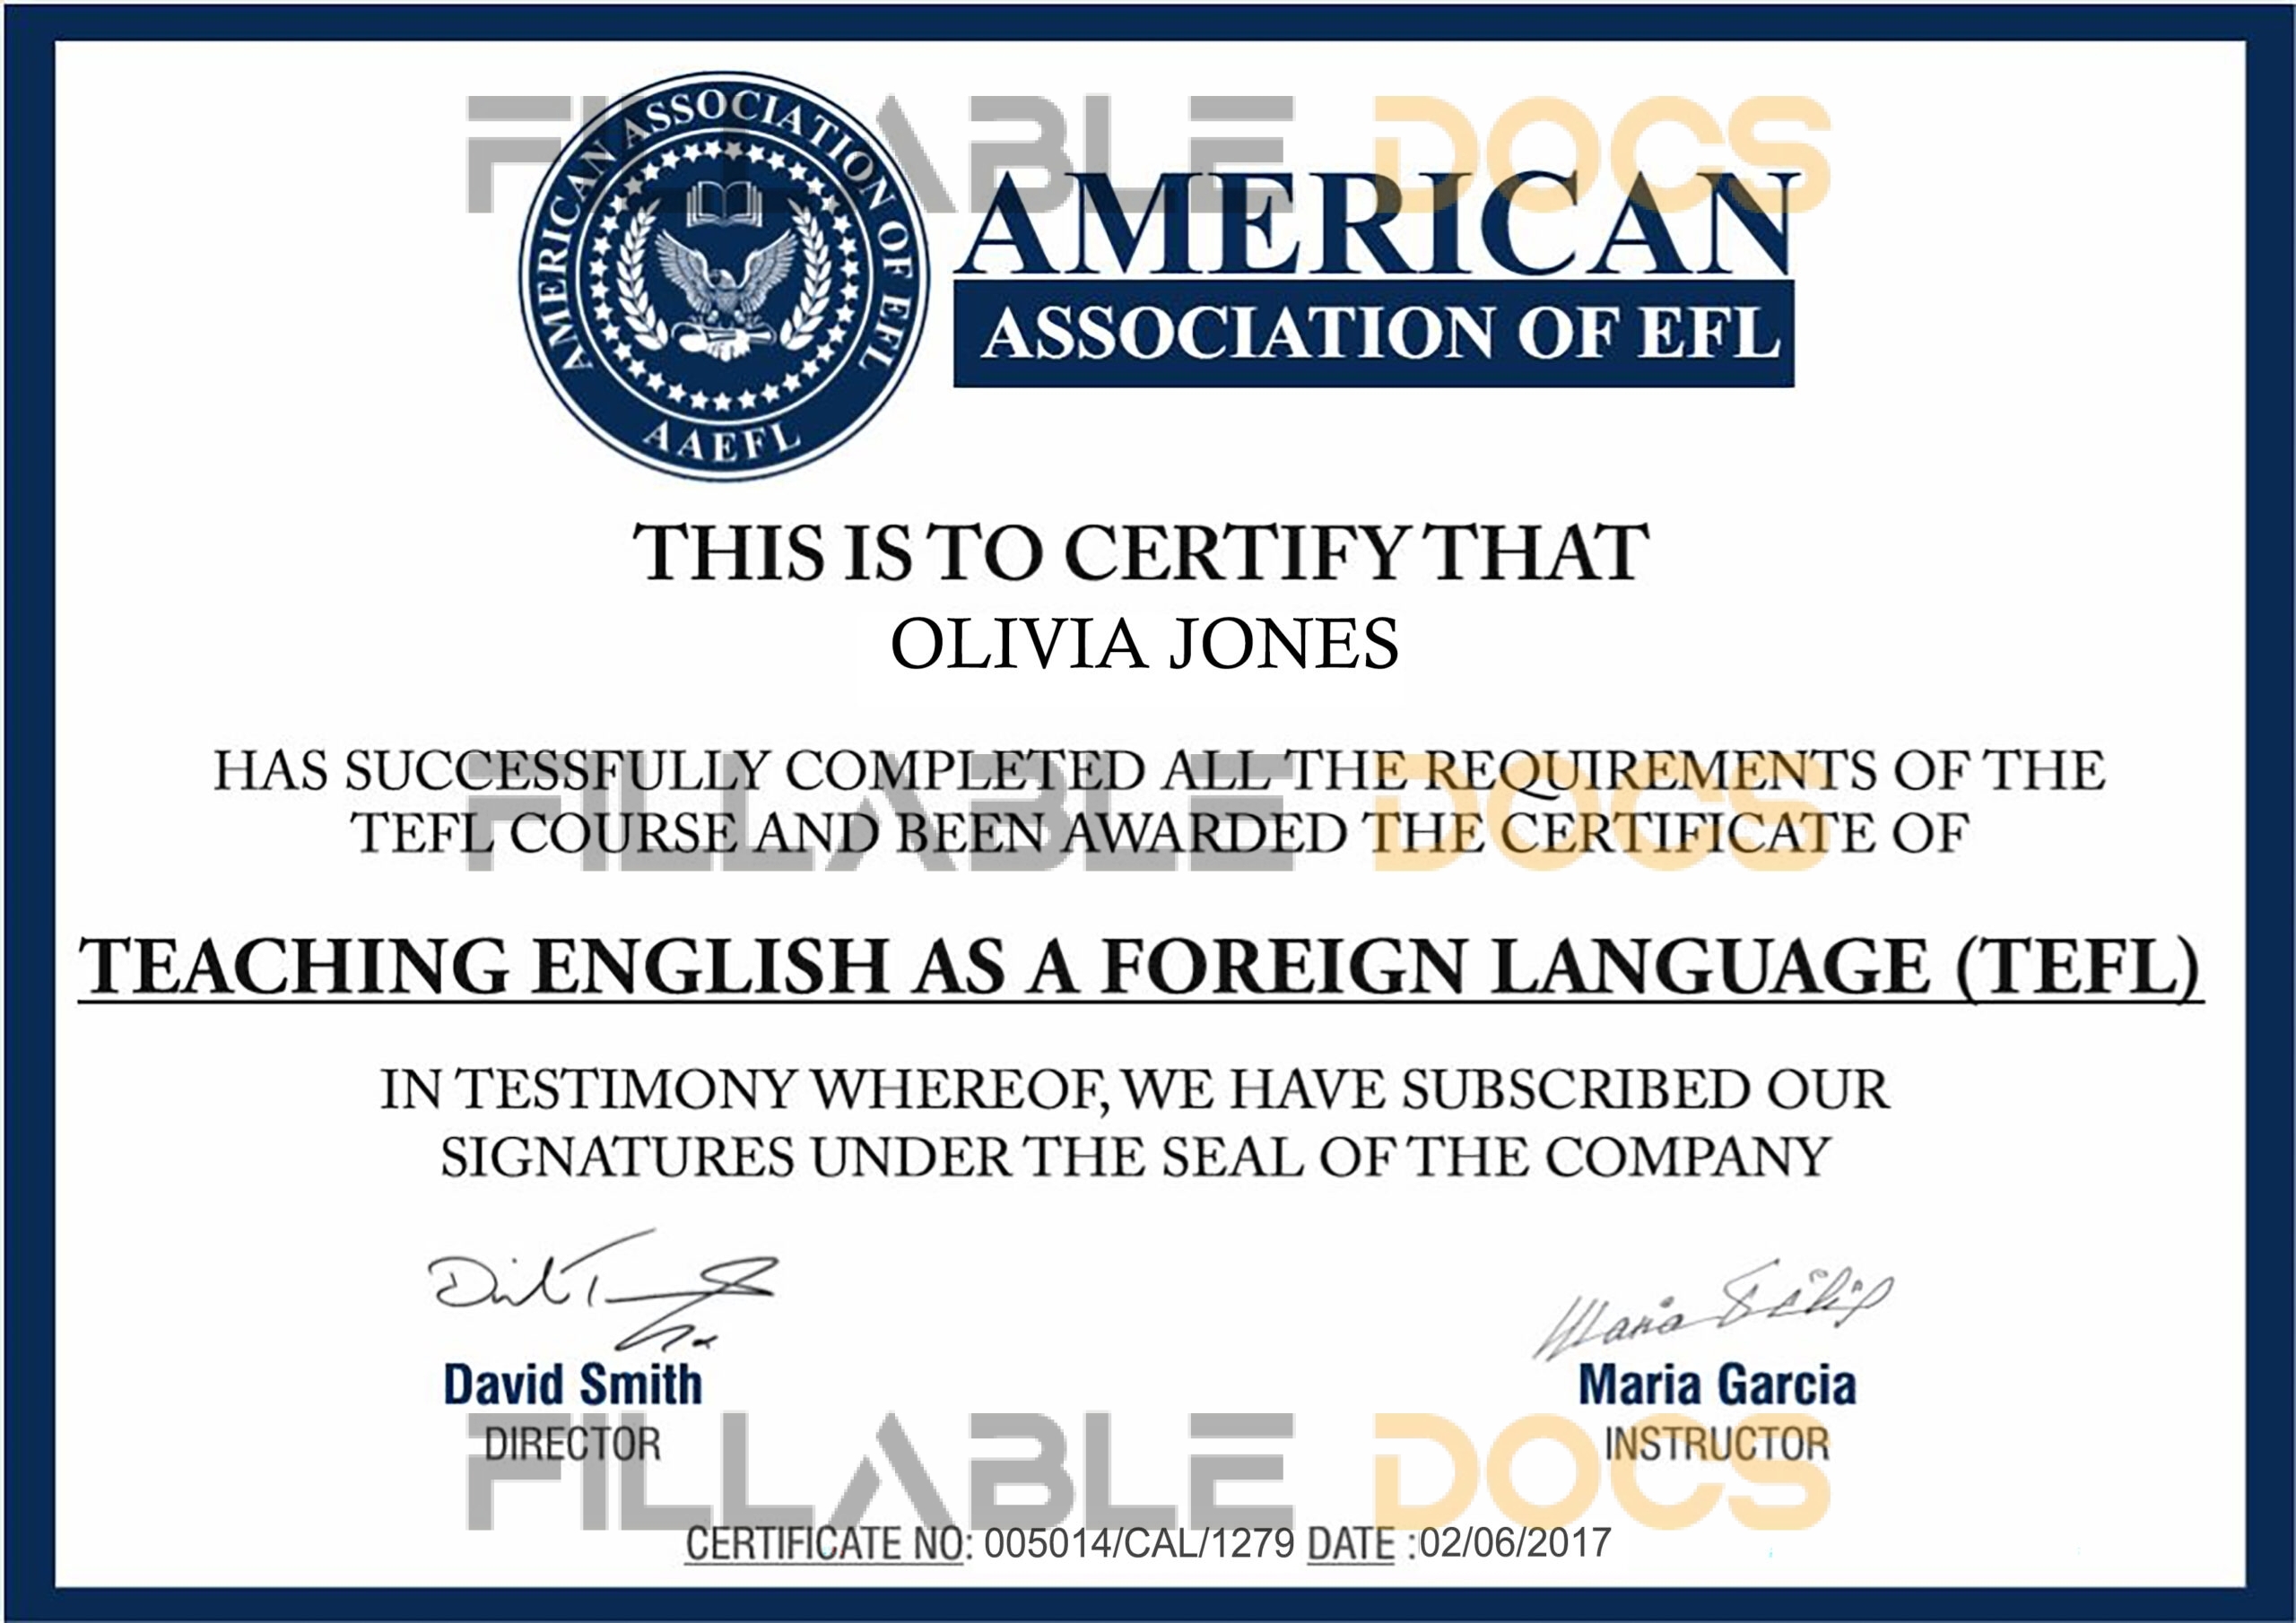 American Association of EFL, TEFL Certificate PSD Template